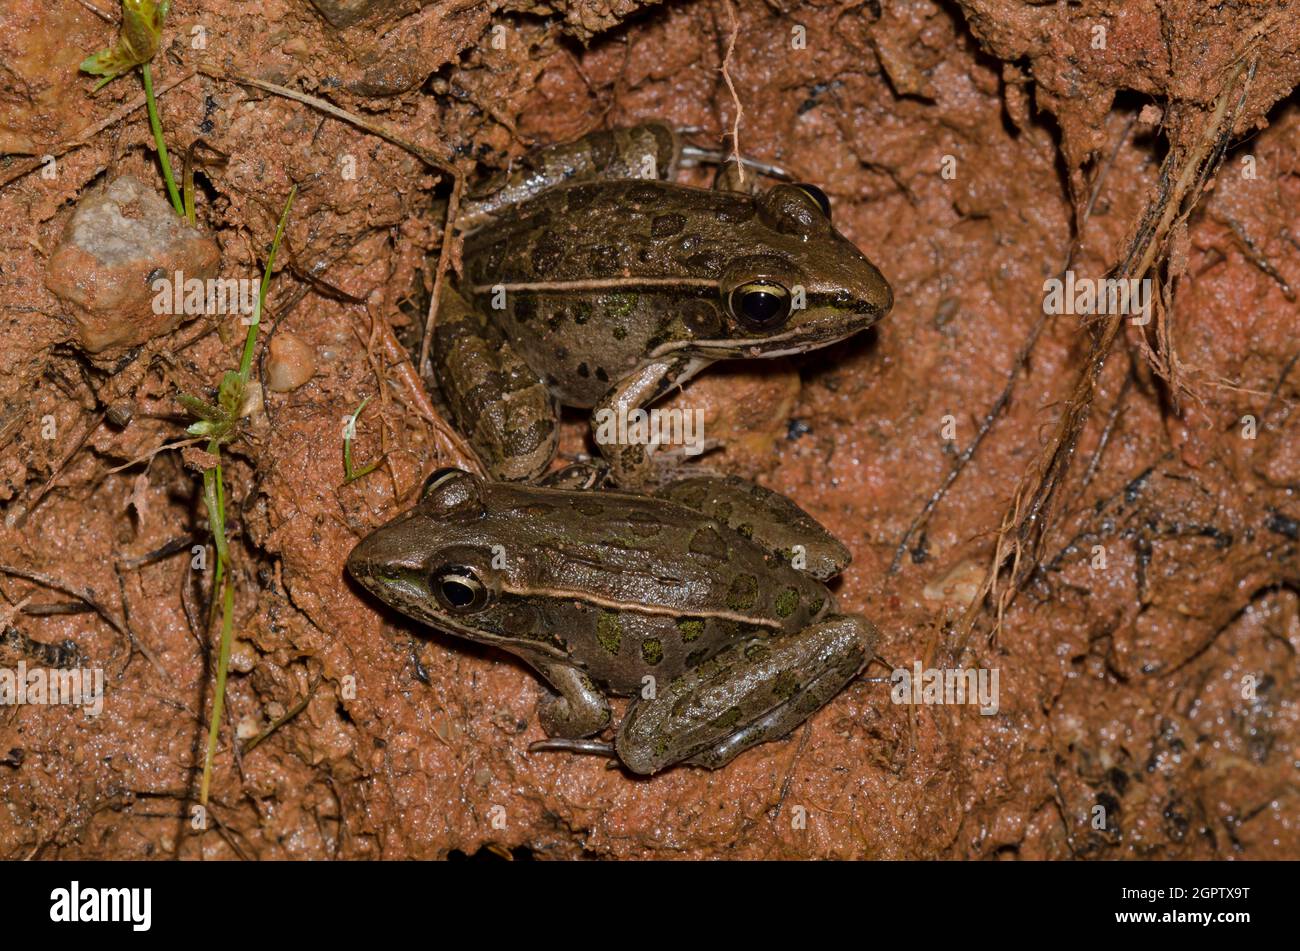 Southern Leopard Frogs, Lithobates sphenocephala Stock Photo